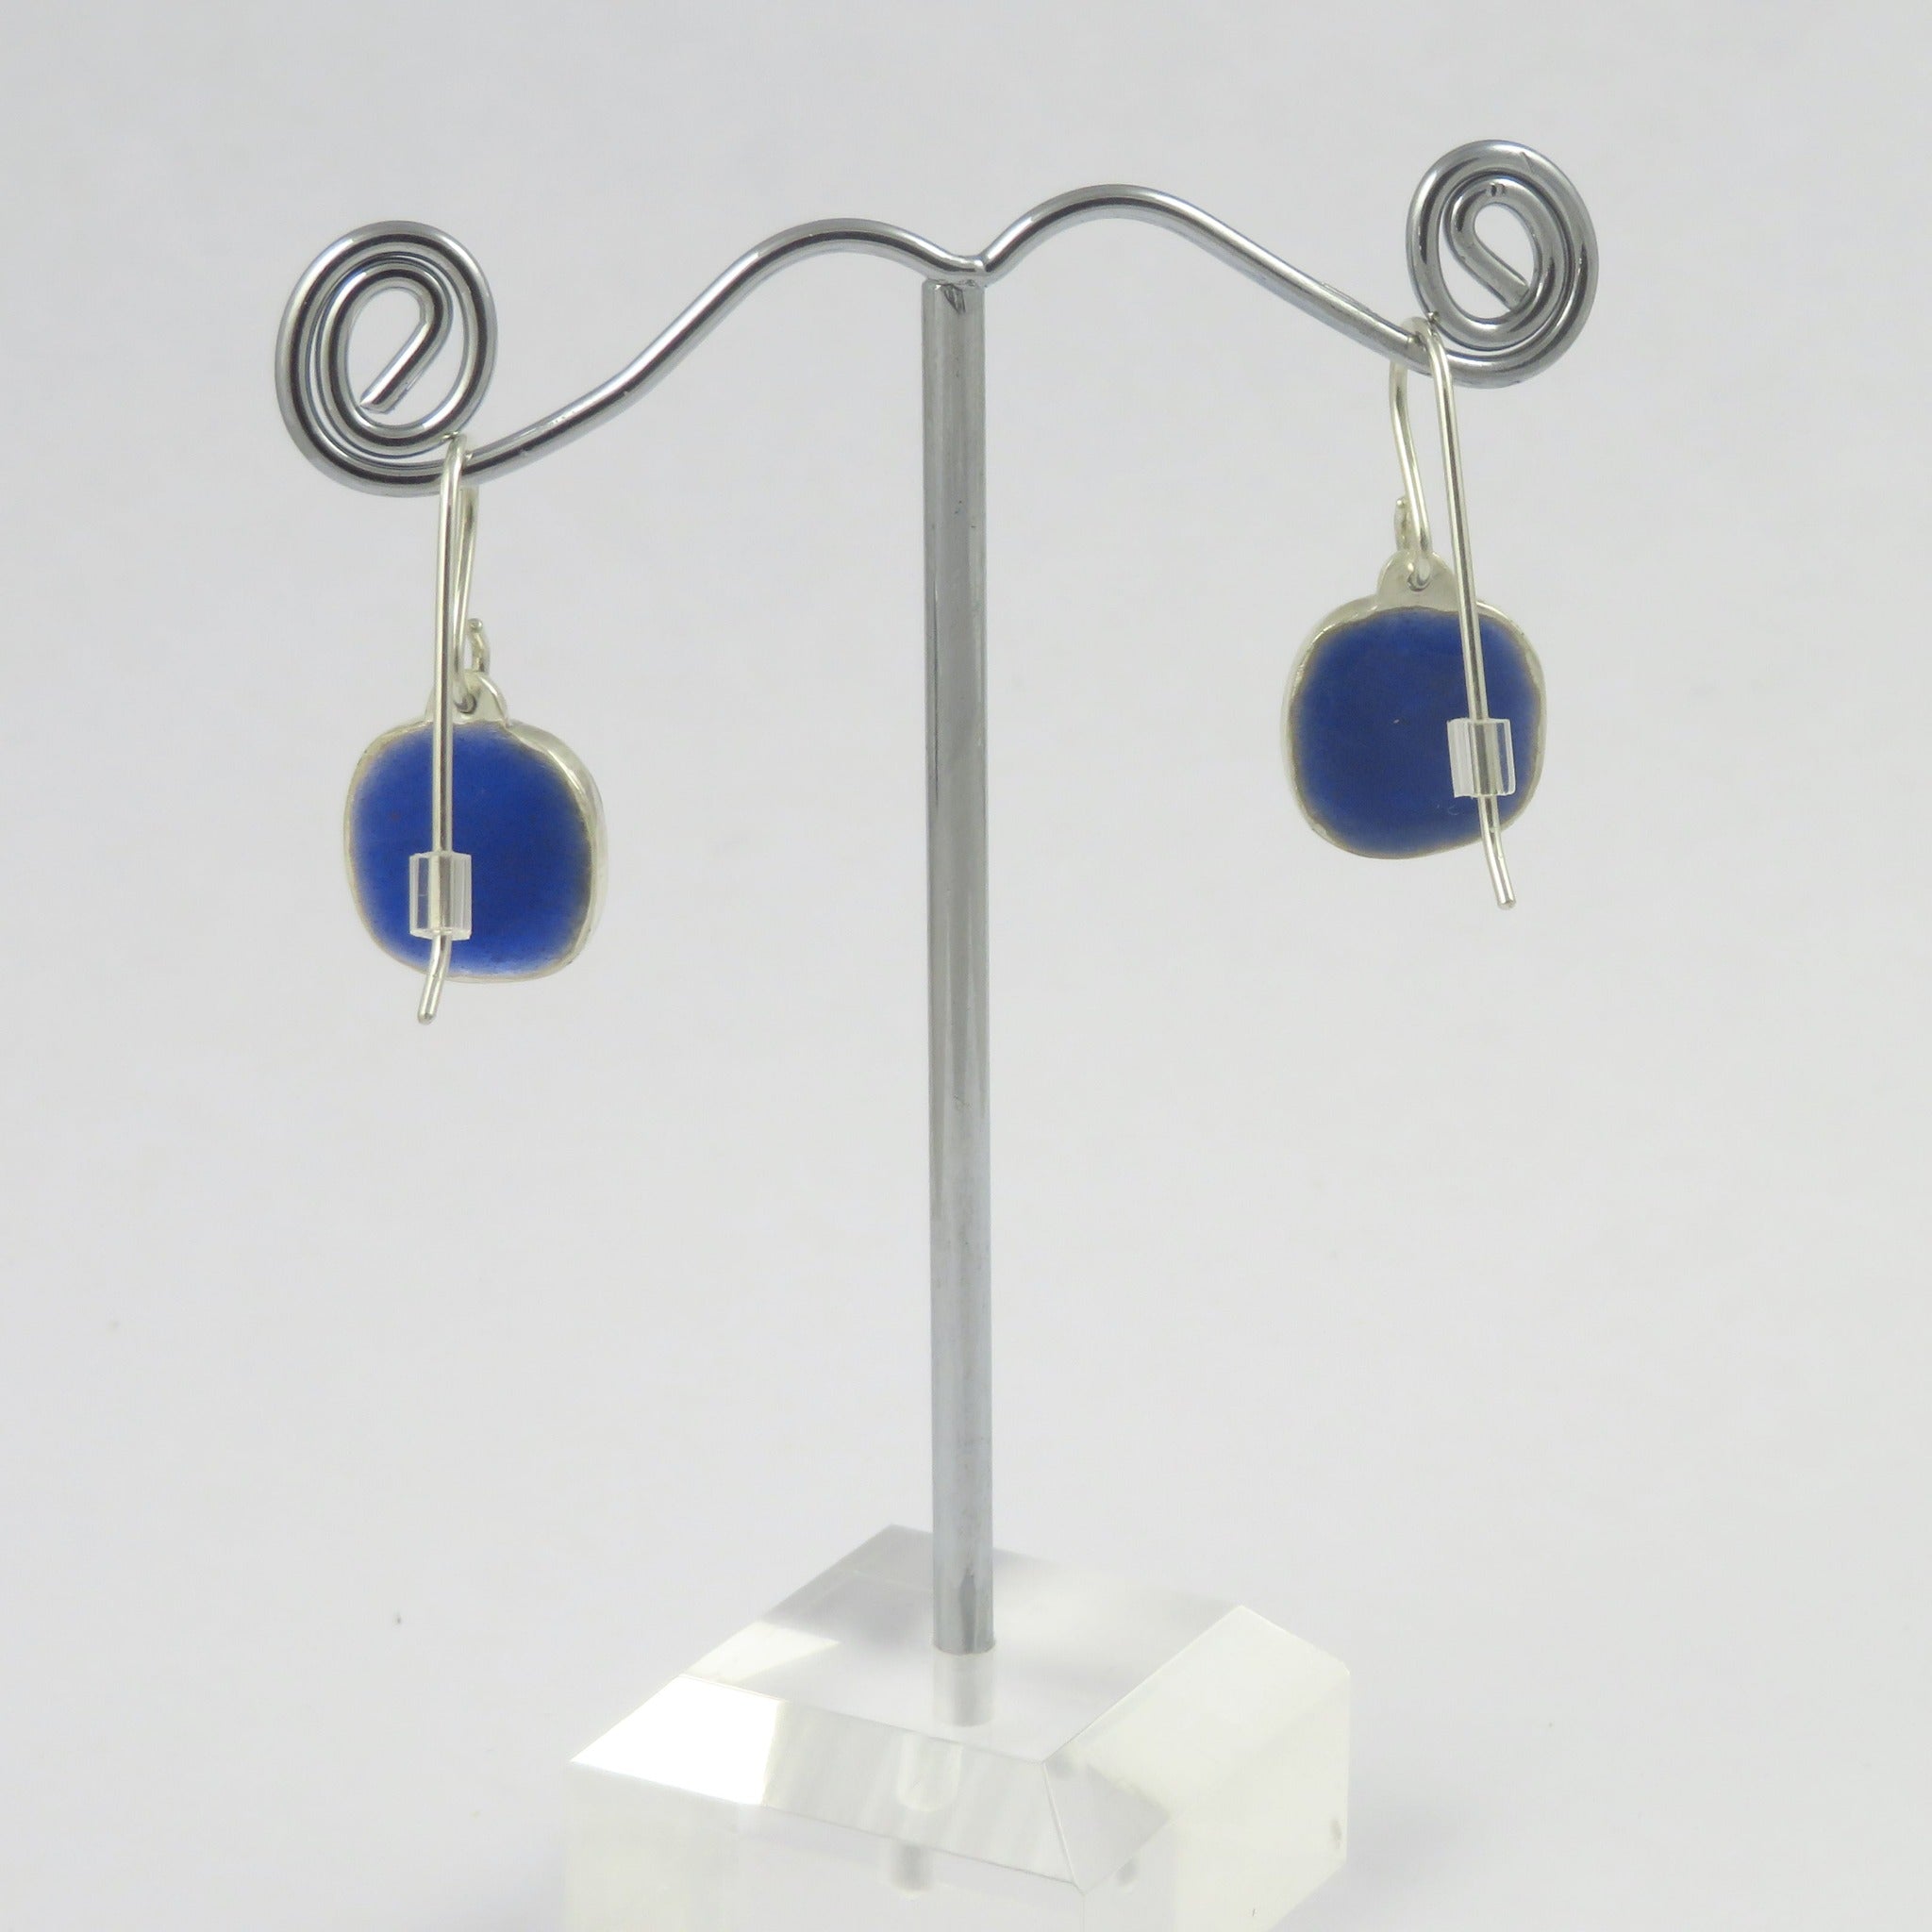 Back Cloisonne earrings handmade by Laura Haszard